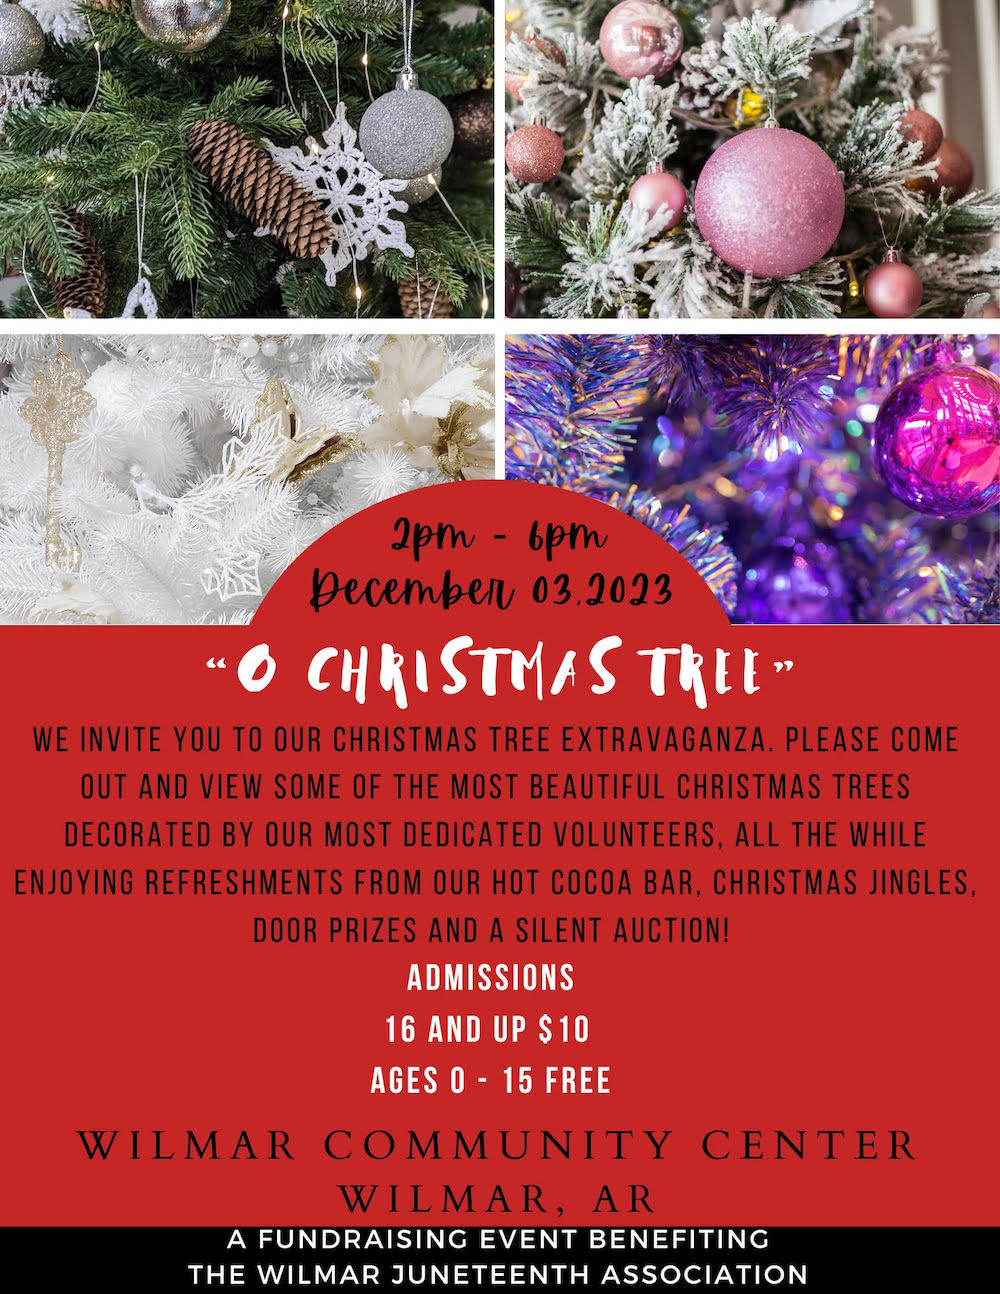 Wilmar to host Christmas Tree event December 3